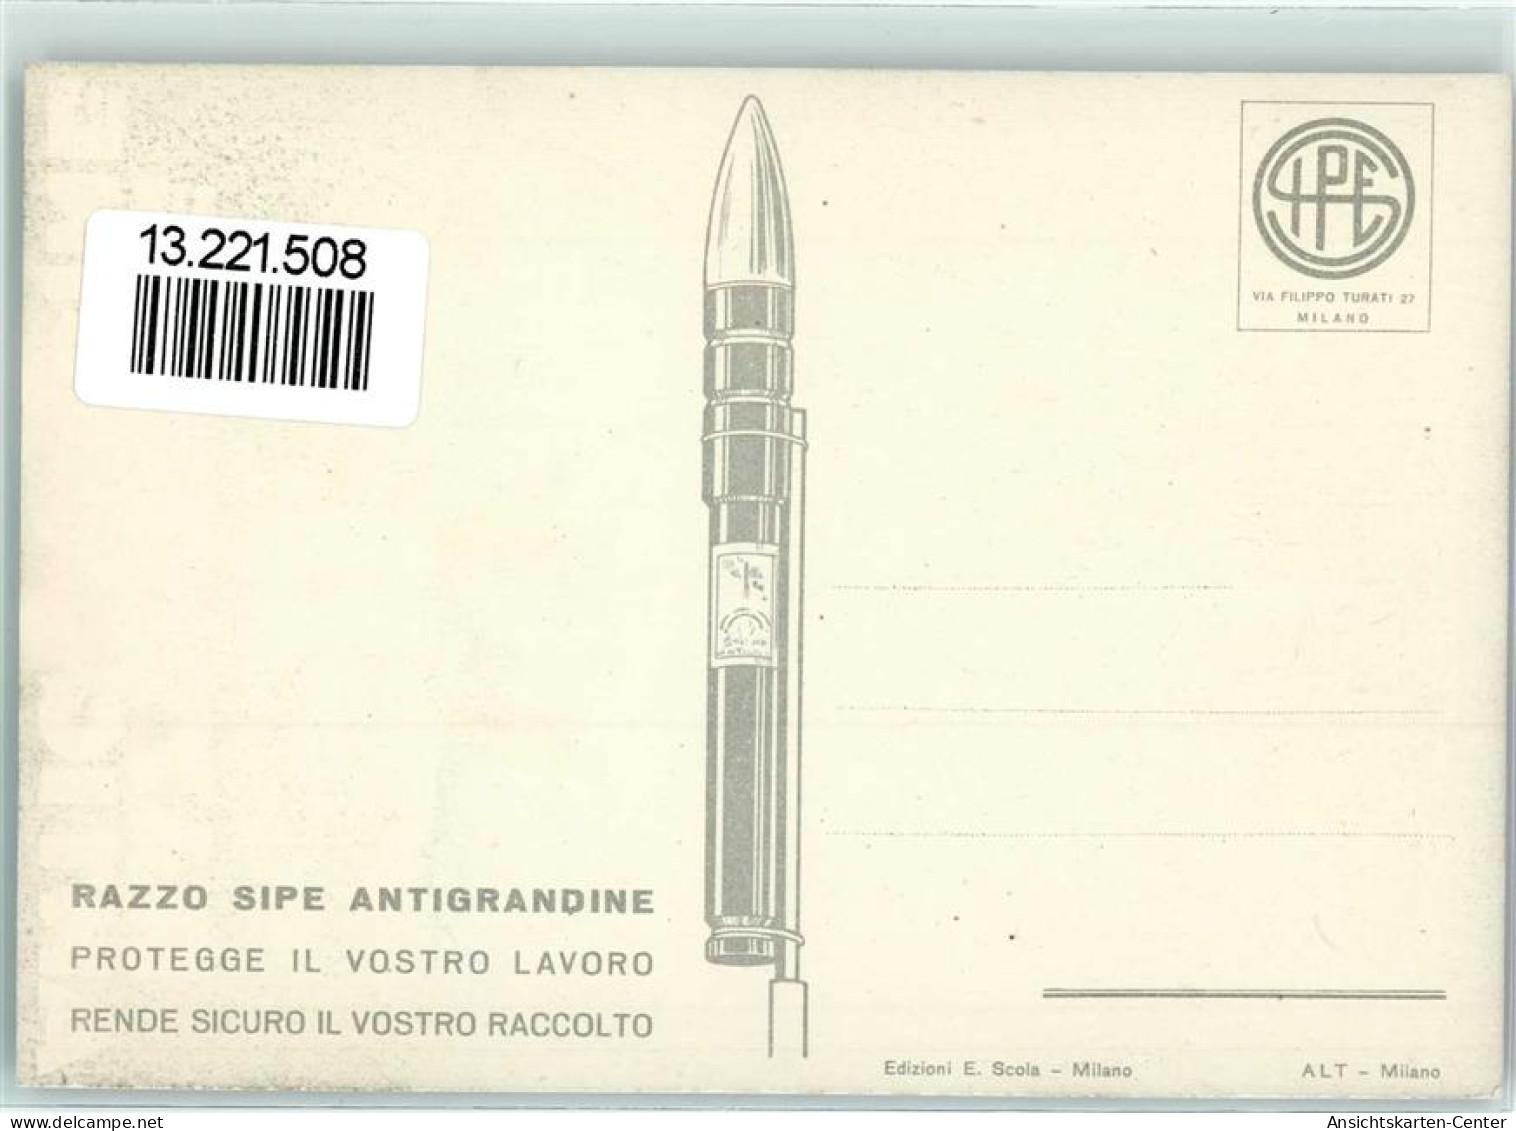 13221508 - Razzo Sipe Antigrandine - Waffen Jagdmunition Patronen  Regenbogen - Advertising